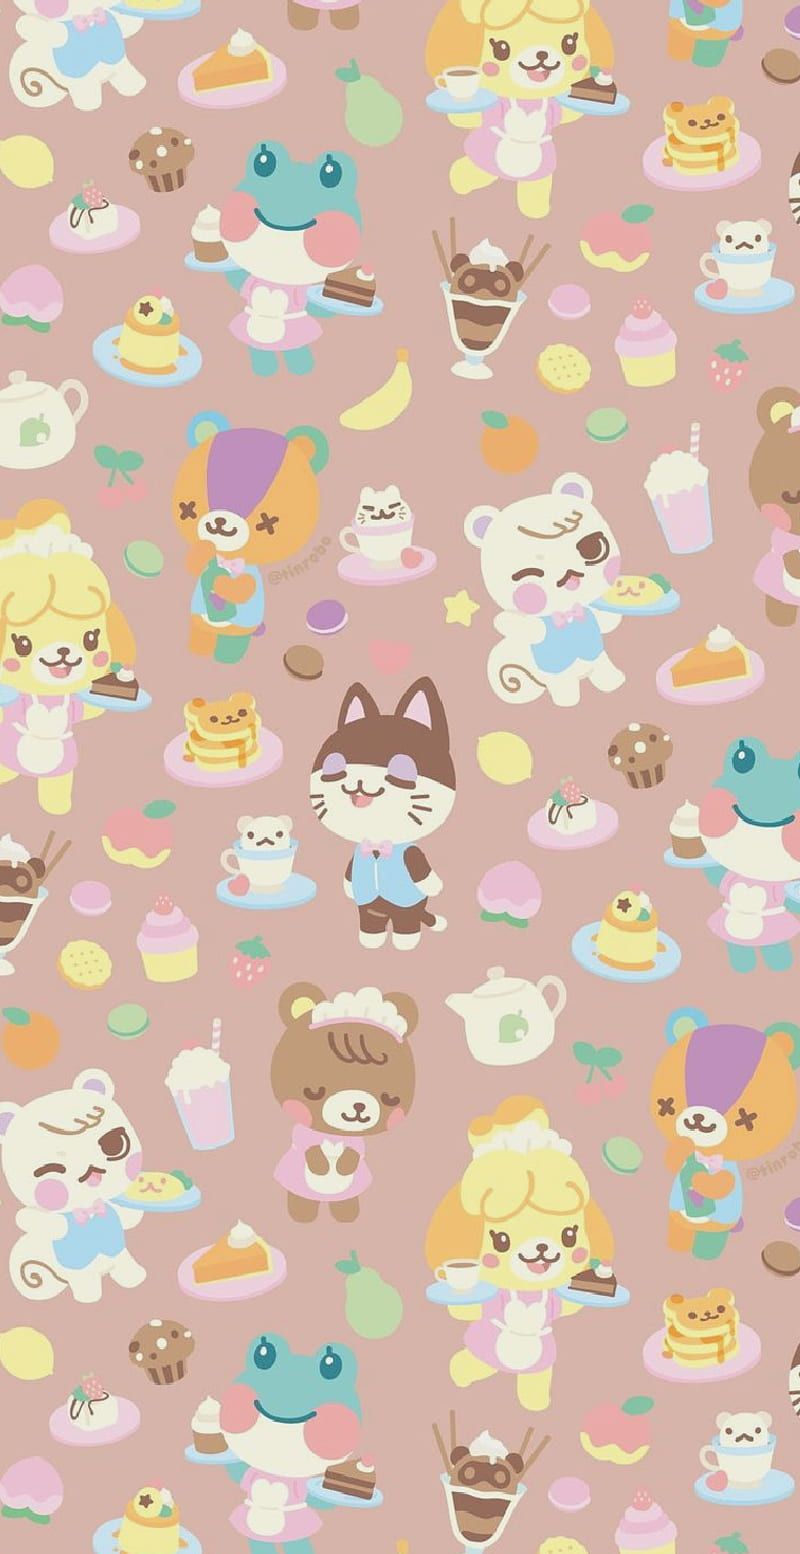 A pattern of cute cartoon characters - Animal Crossing